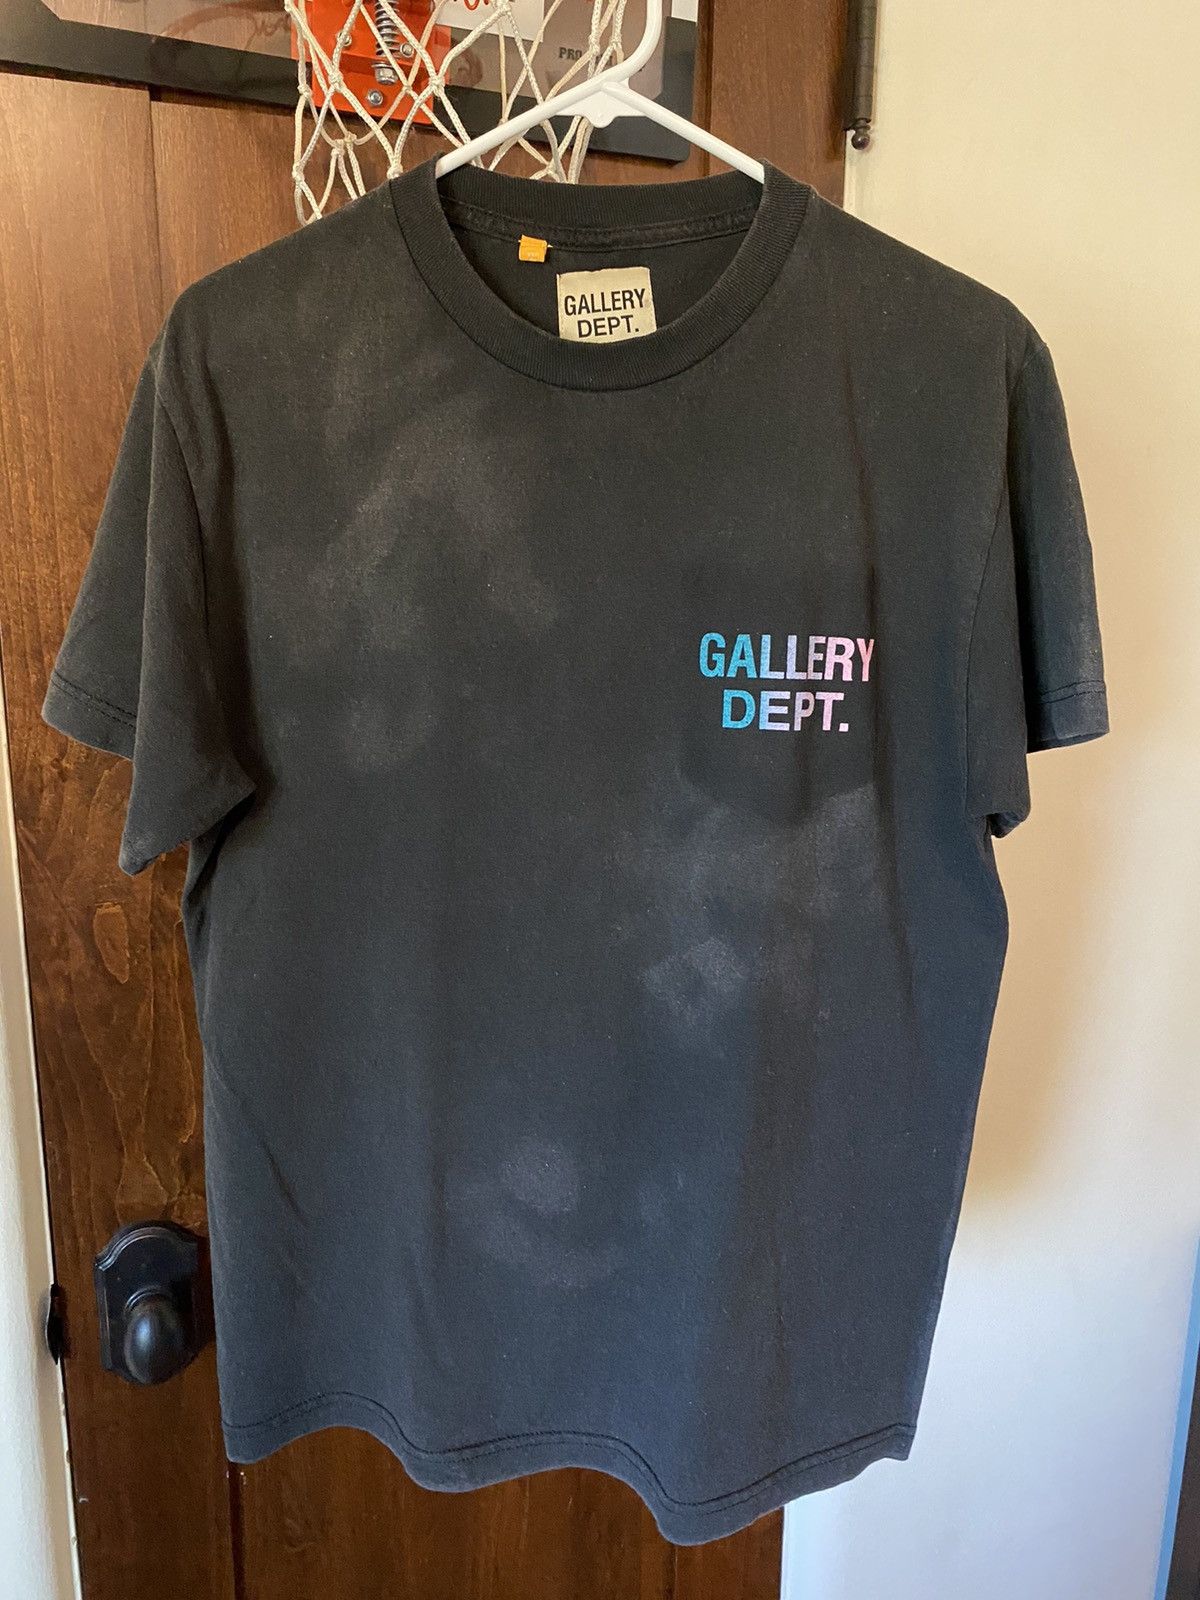 Gallery Dept. Gallery Department (Dept.) 'Boardwalk' T shirt | Grailed